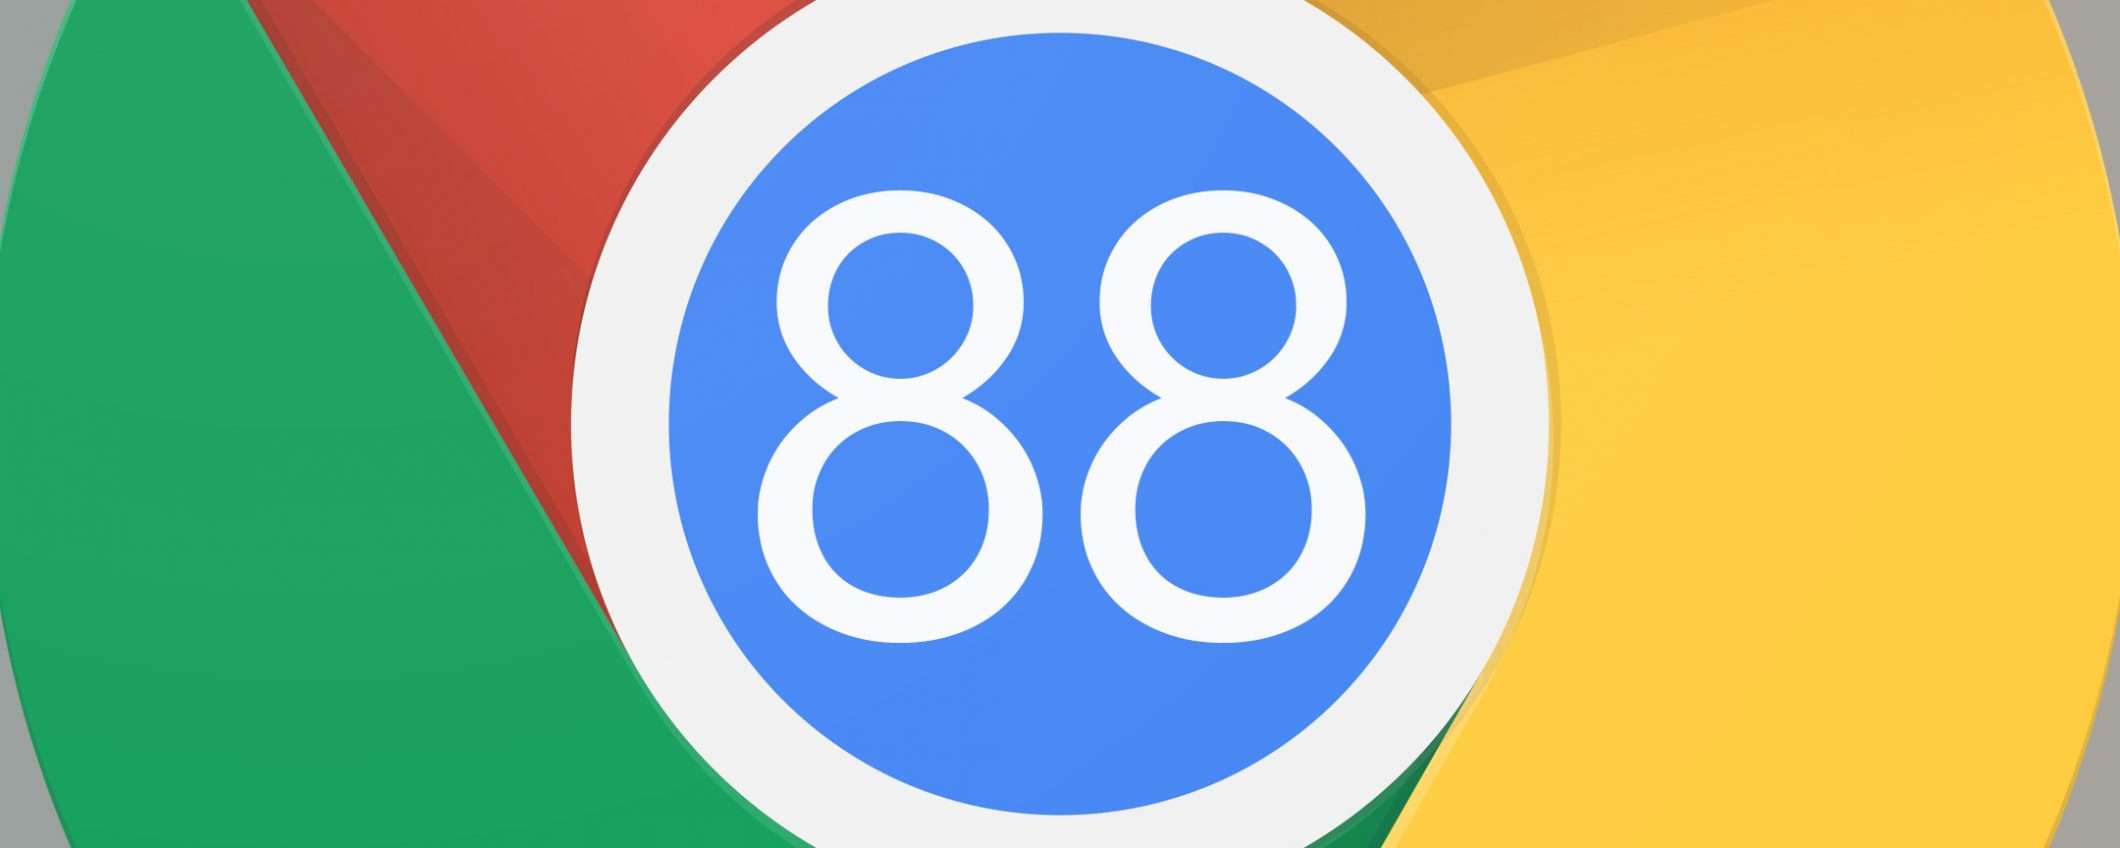 Chrome 88: nuovo update risolve nove vulnerabilità